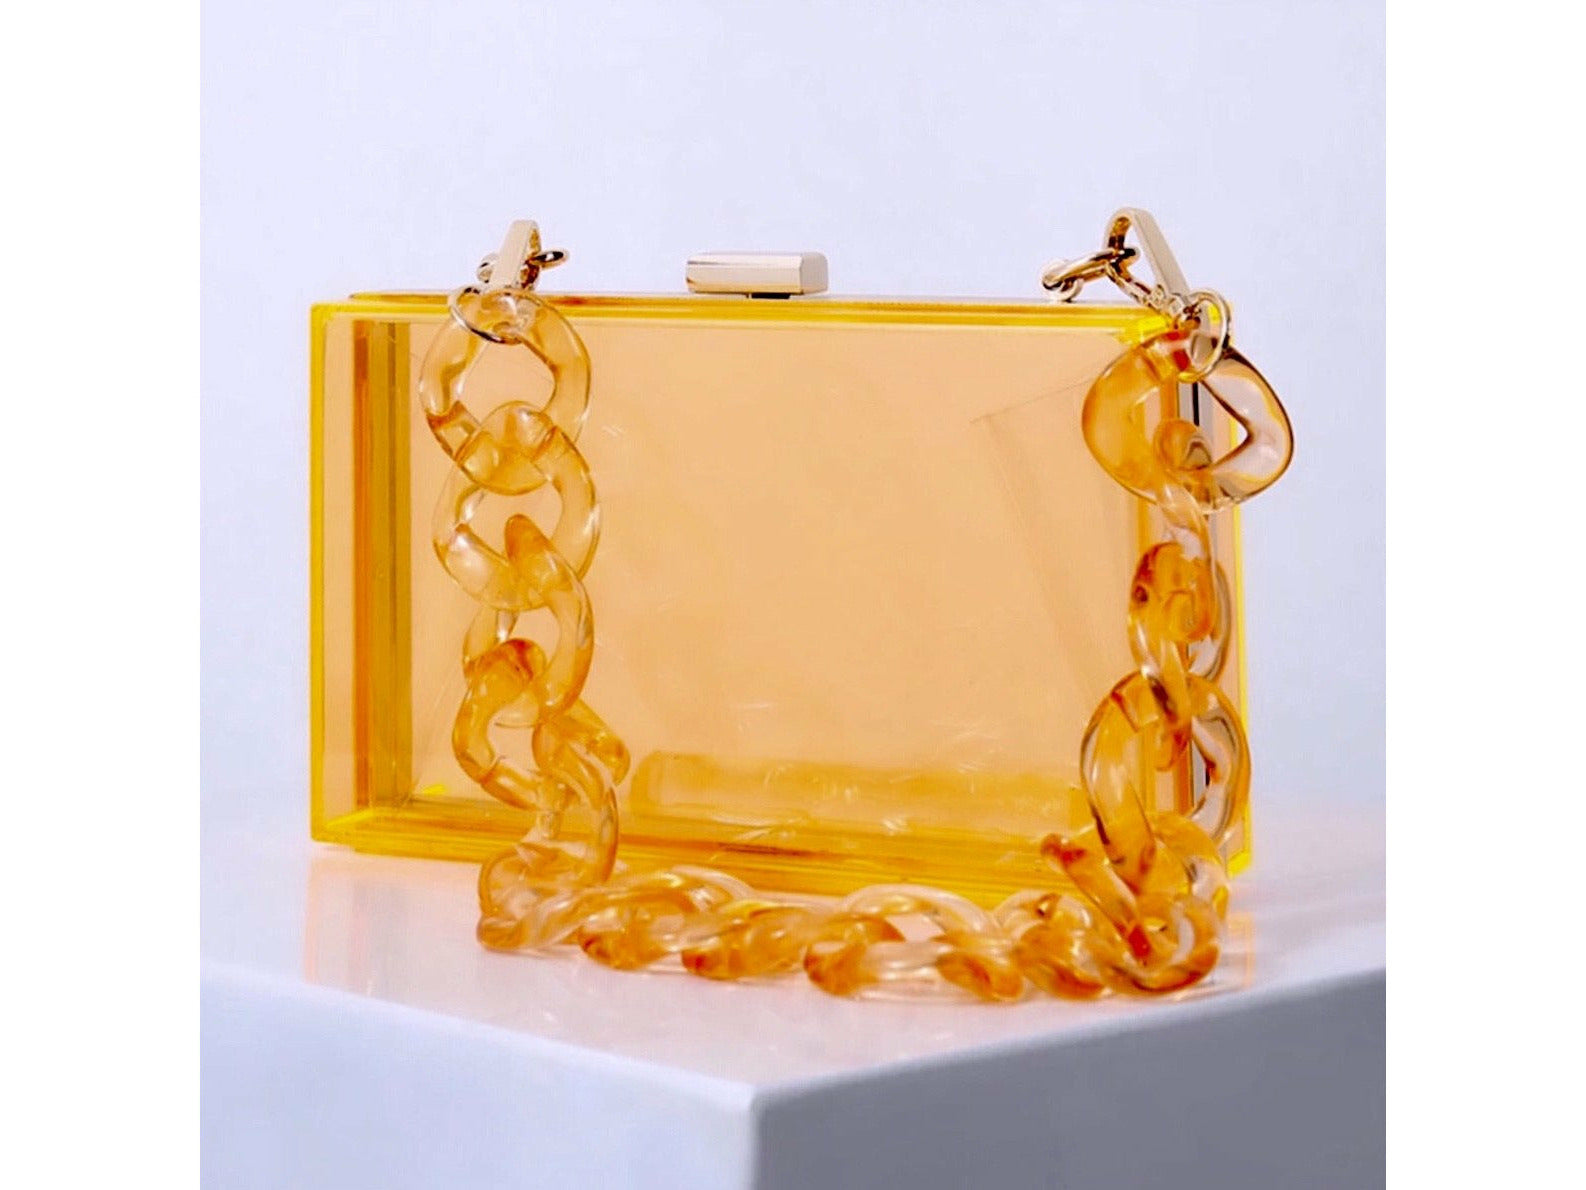 acrylic box purse